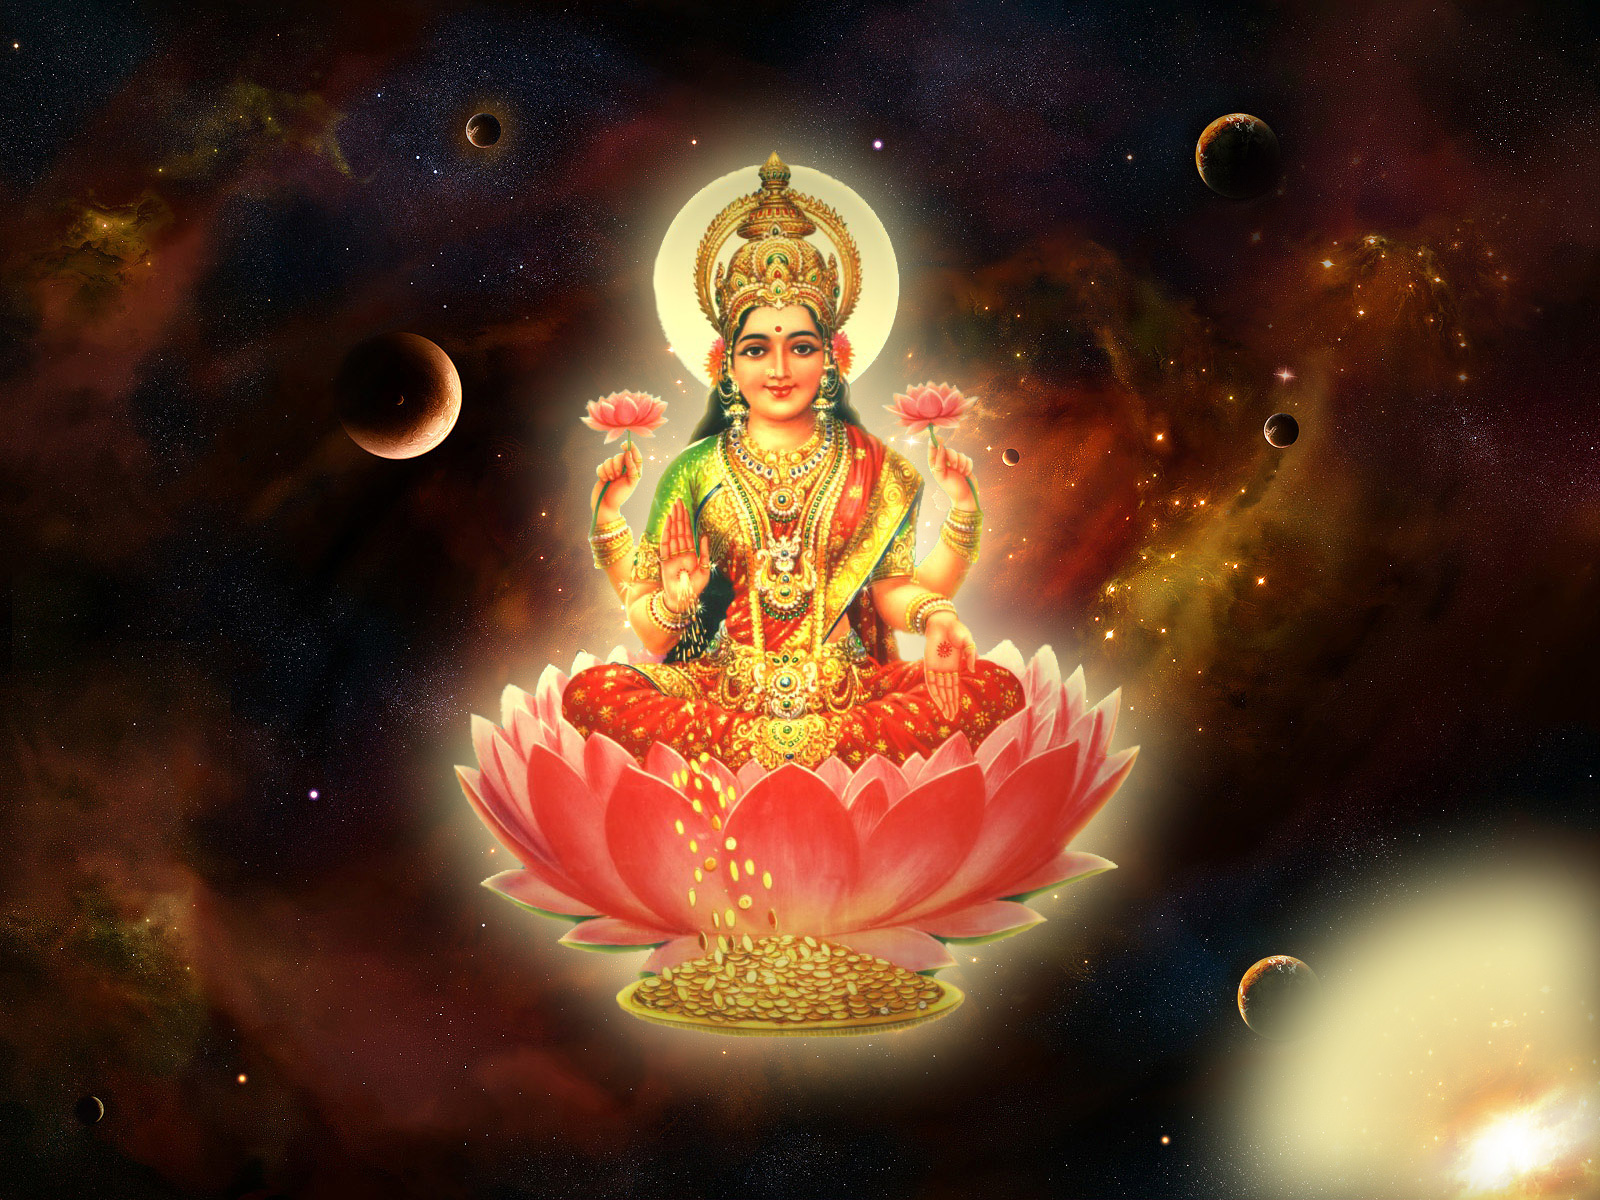 Maa MahaLakshmi Devi Laxmi Goddess of Wealth